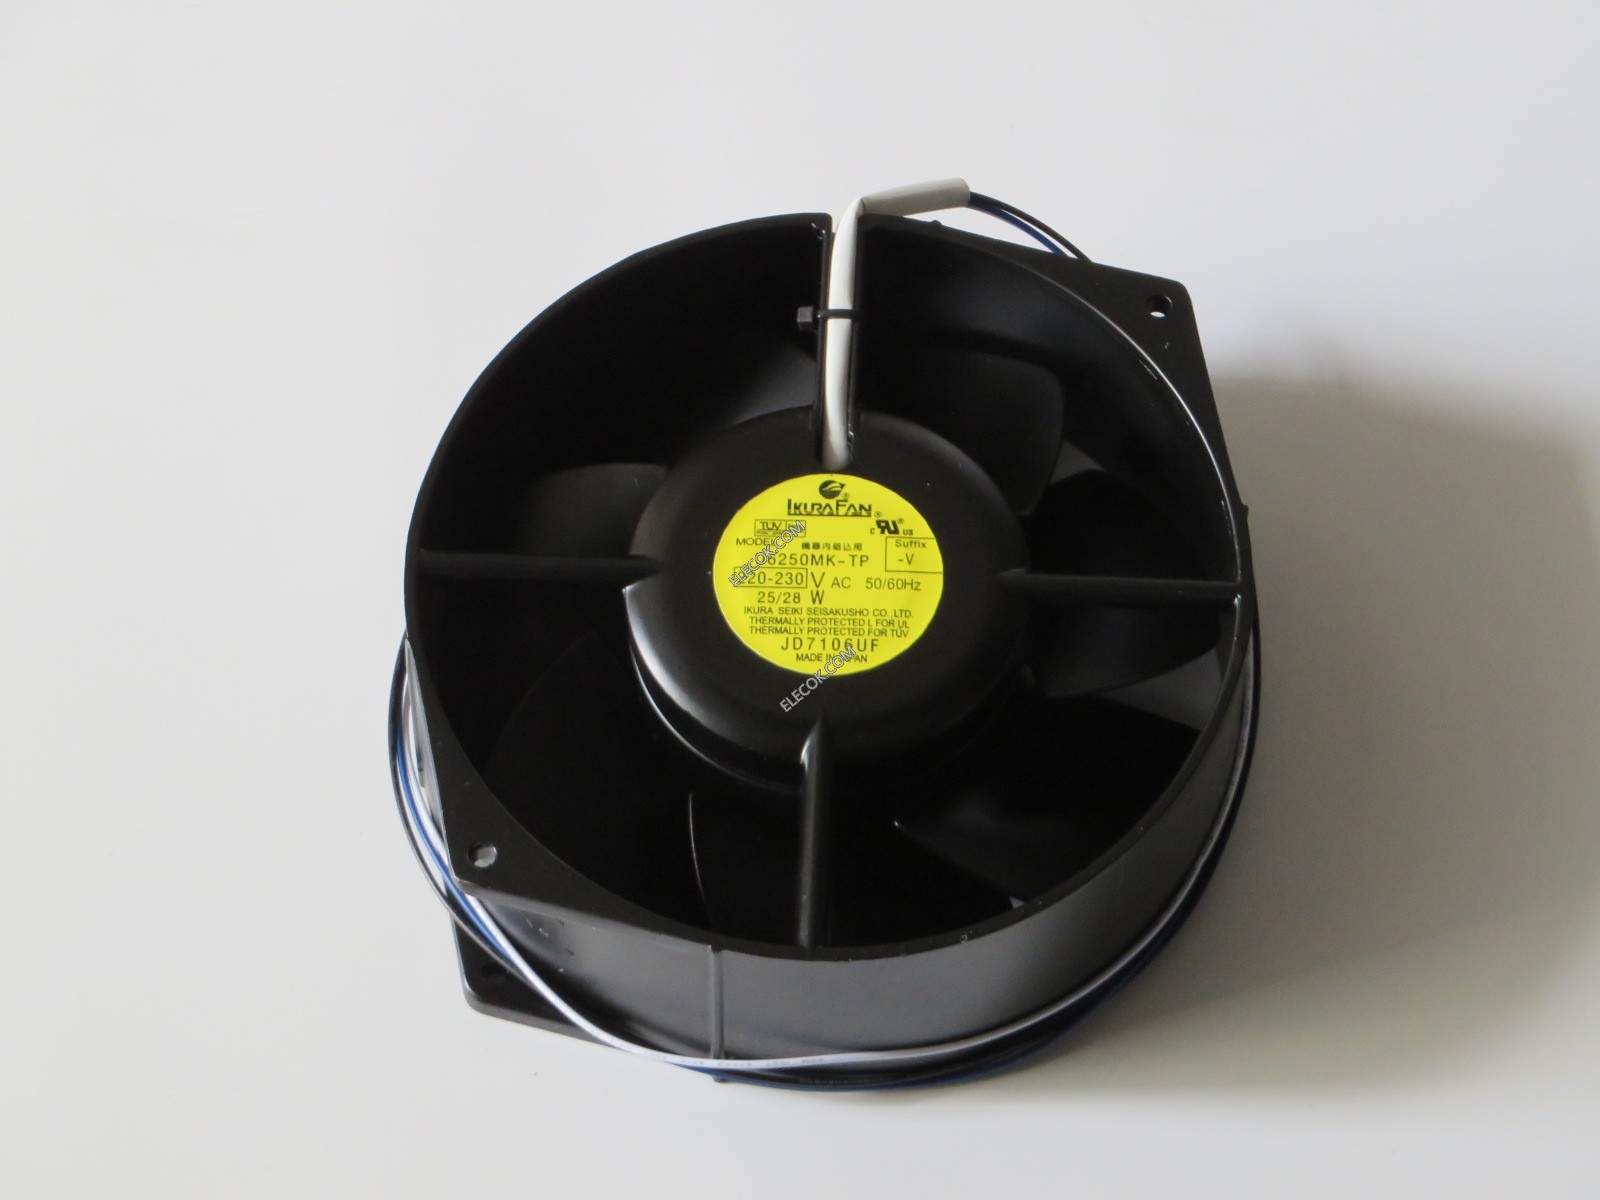 IKURA FAN U6250MK-TP 220/230V 25/28W 3wires Cooling Fan, refurbished